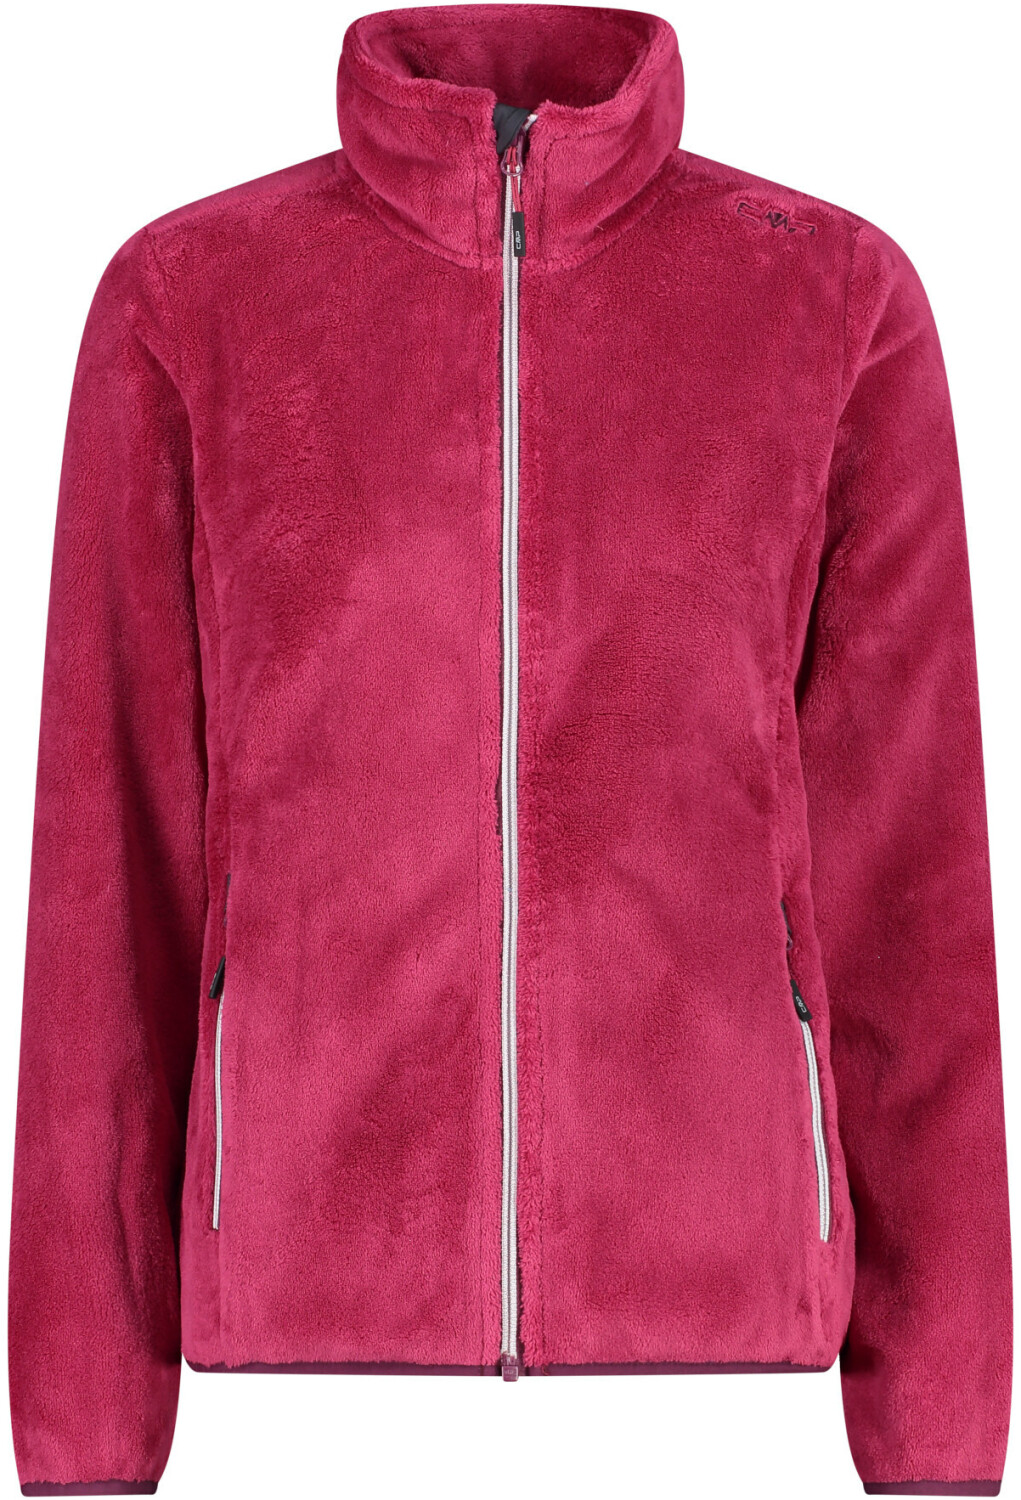 CMP Women Fleece Jacket (38P1536) sangria ab 39,99 € | Preisvergleich bei